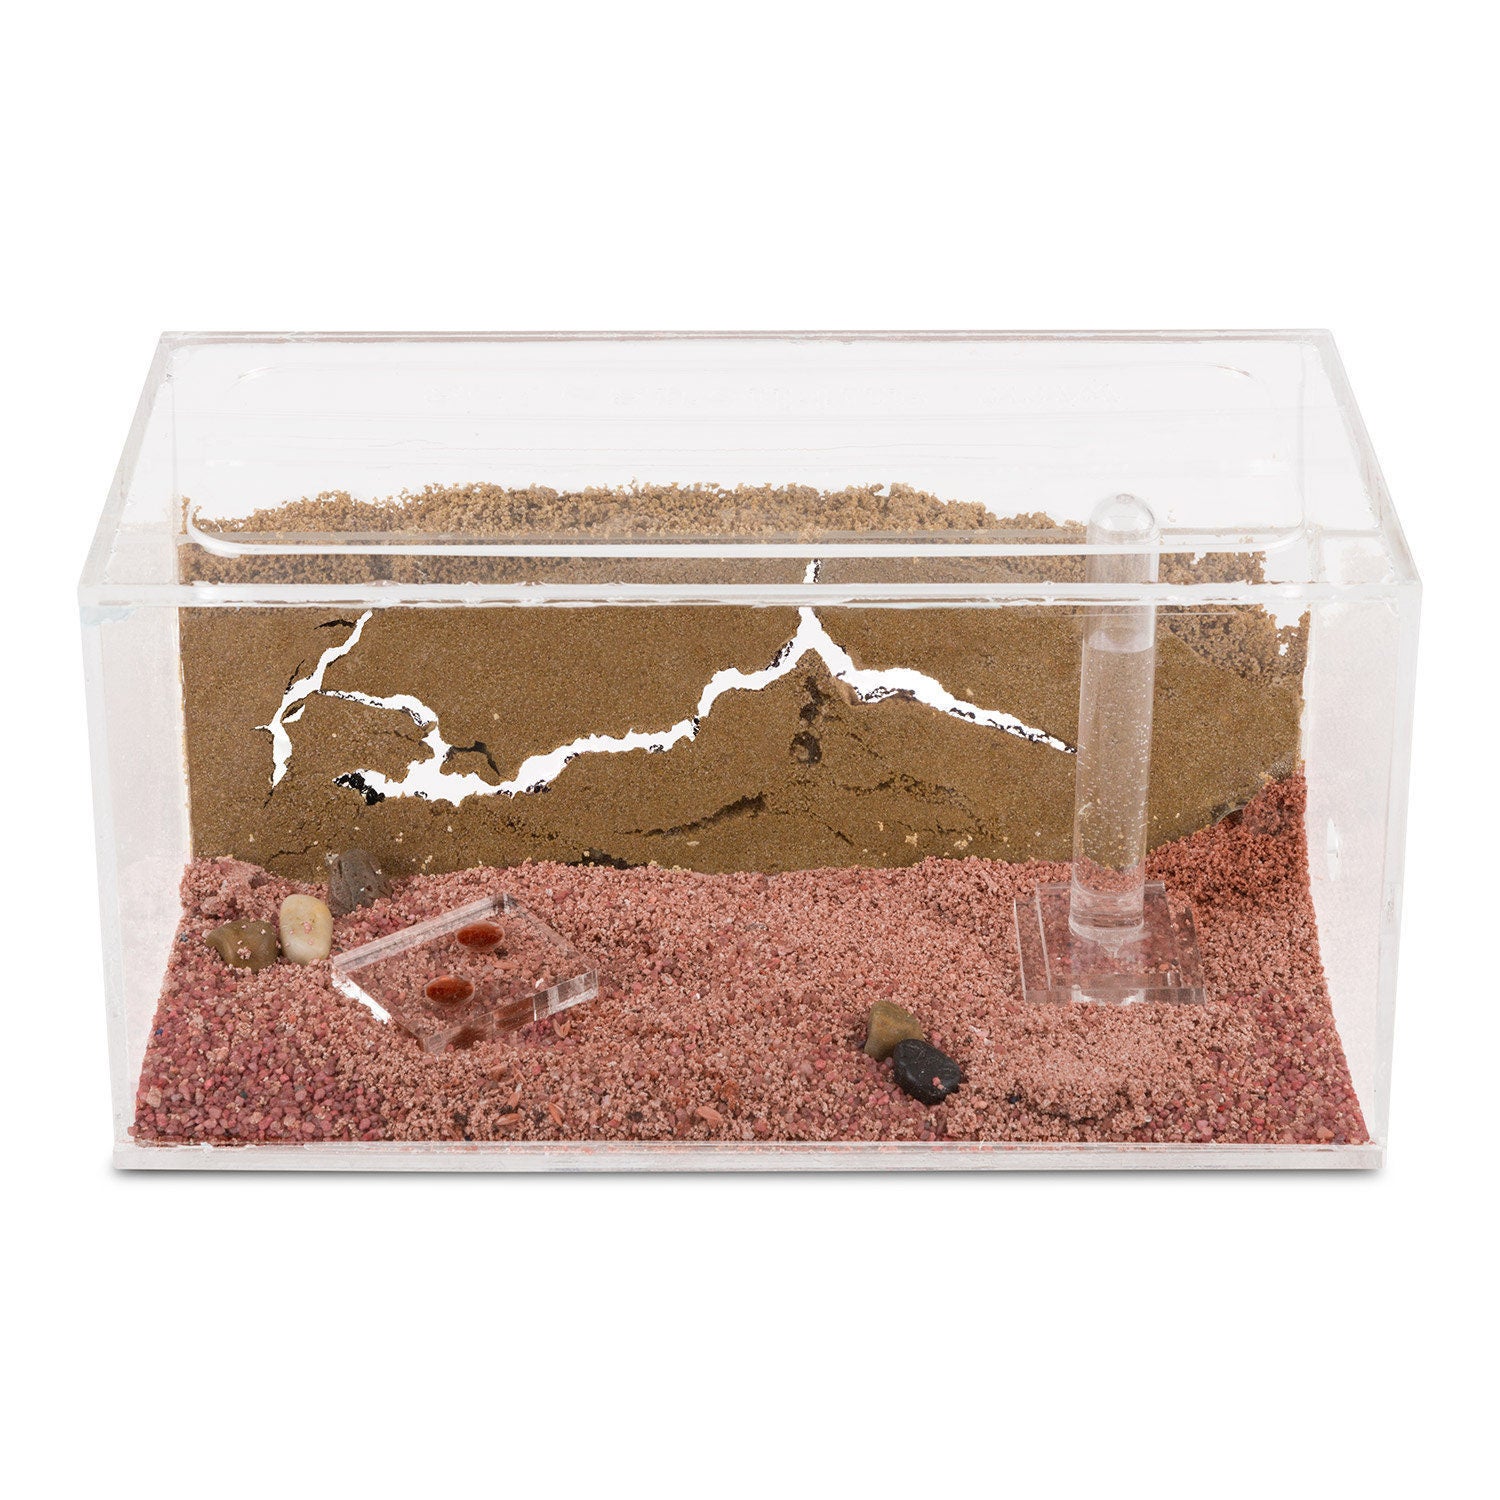 Anthill, Formicarium, Educational, Ants Sand Ant Farm Mini 